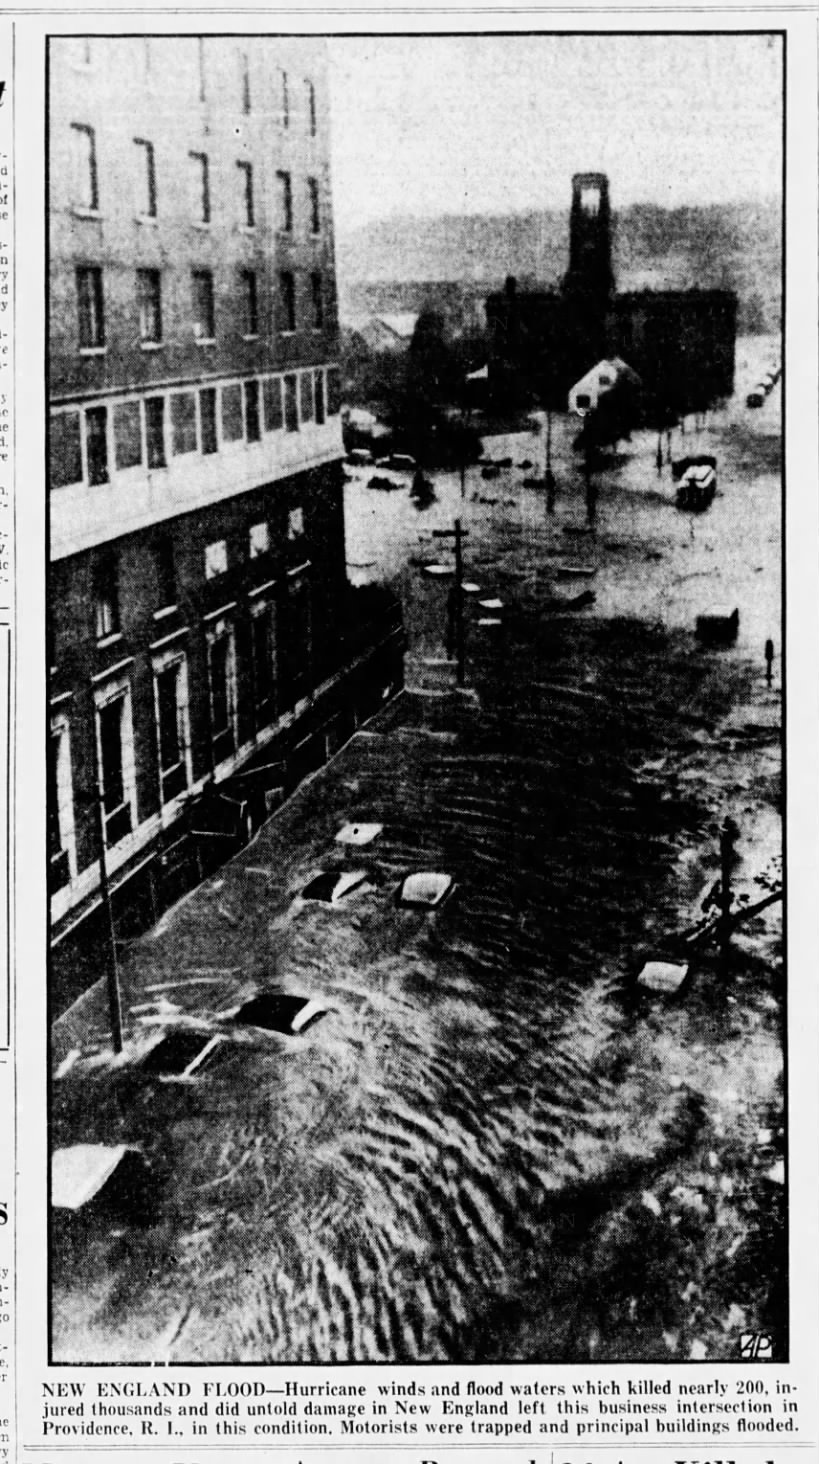 Providence, RI, experiences massive flooding due to 1938 hurricane